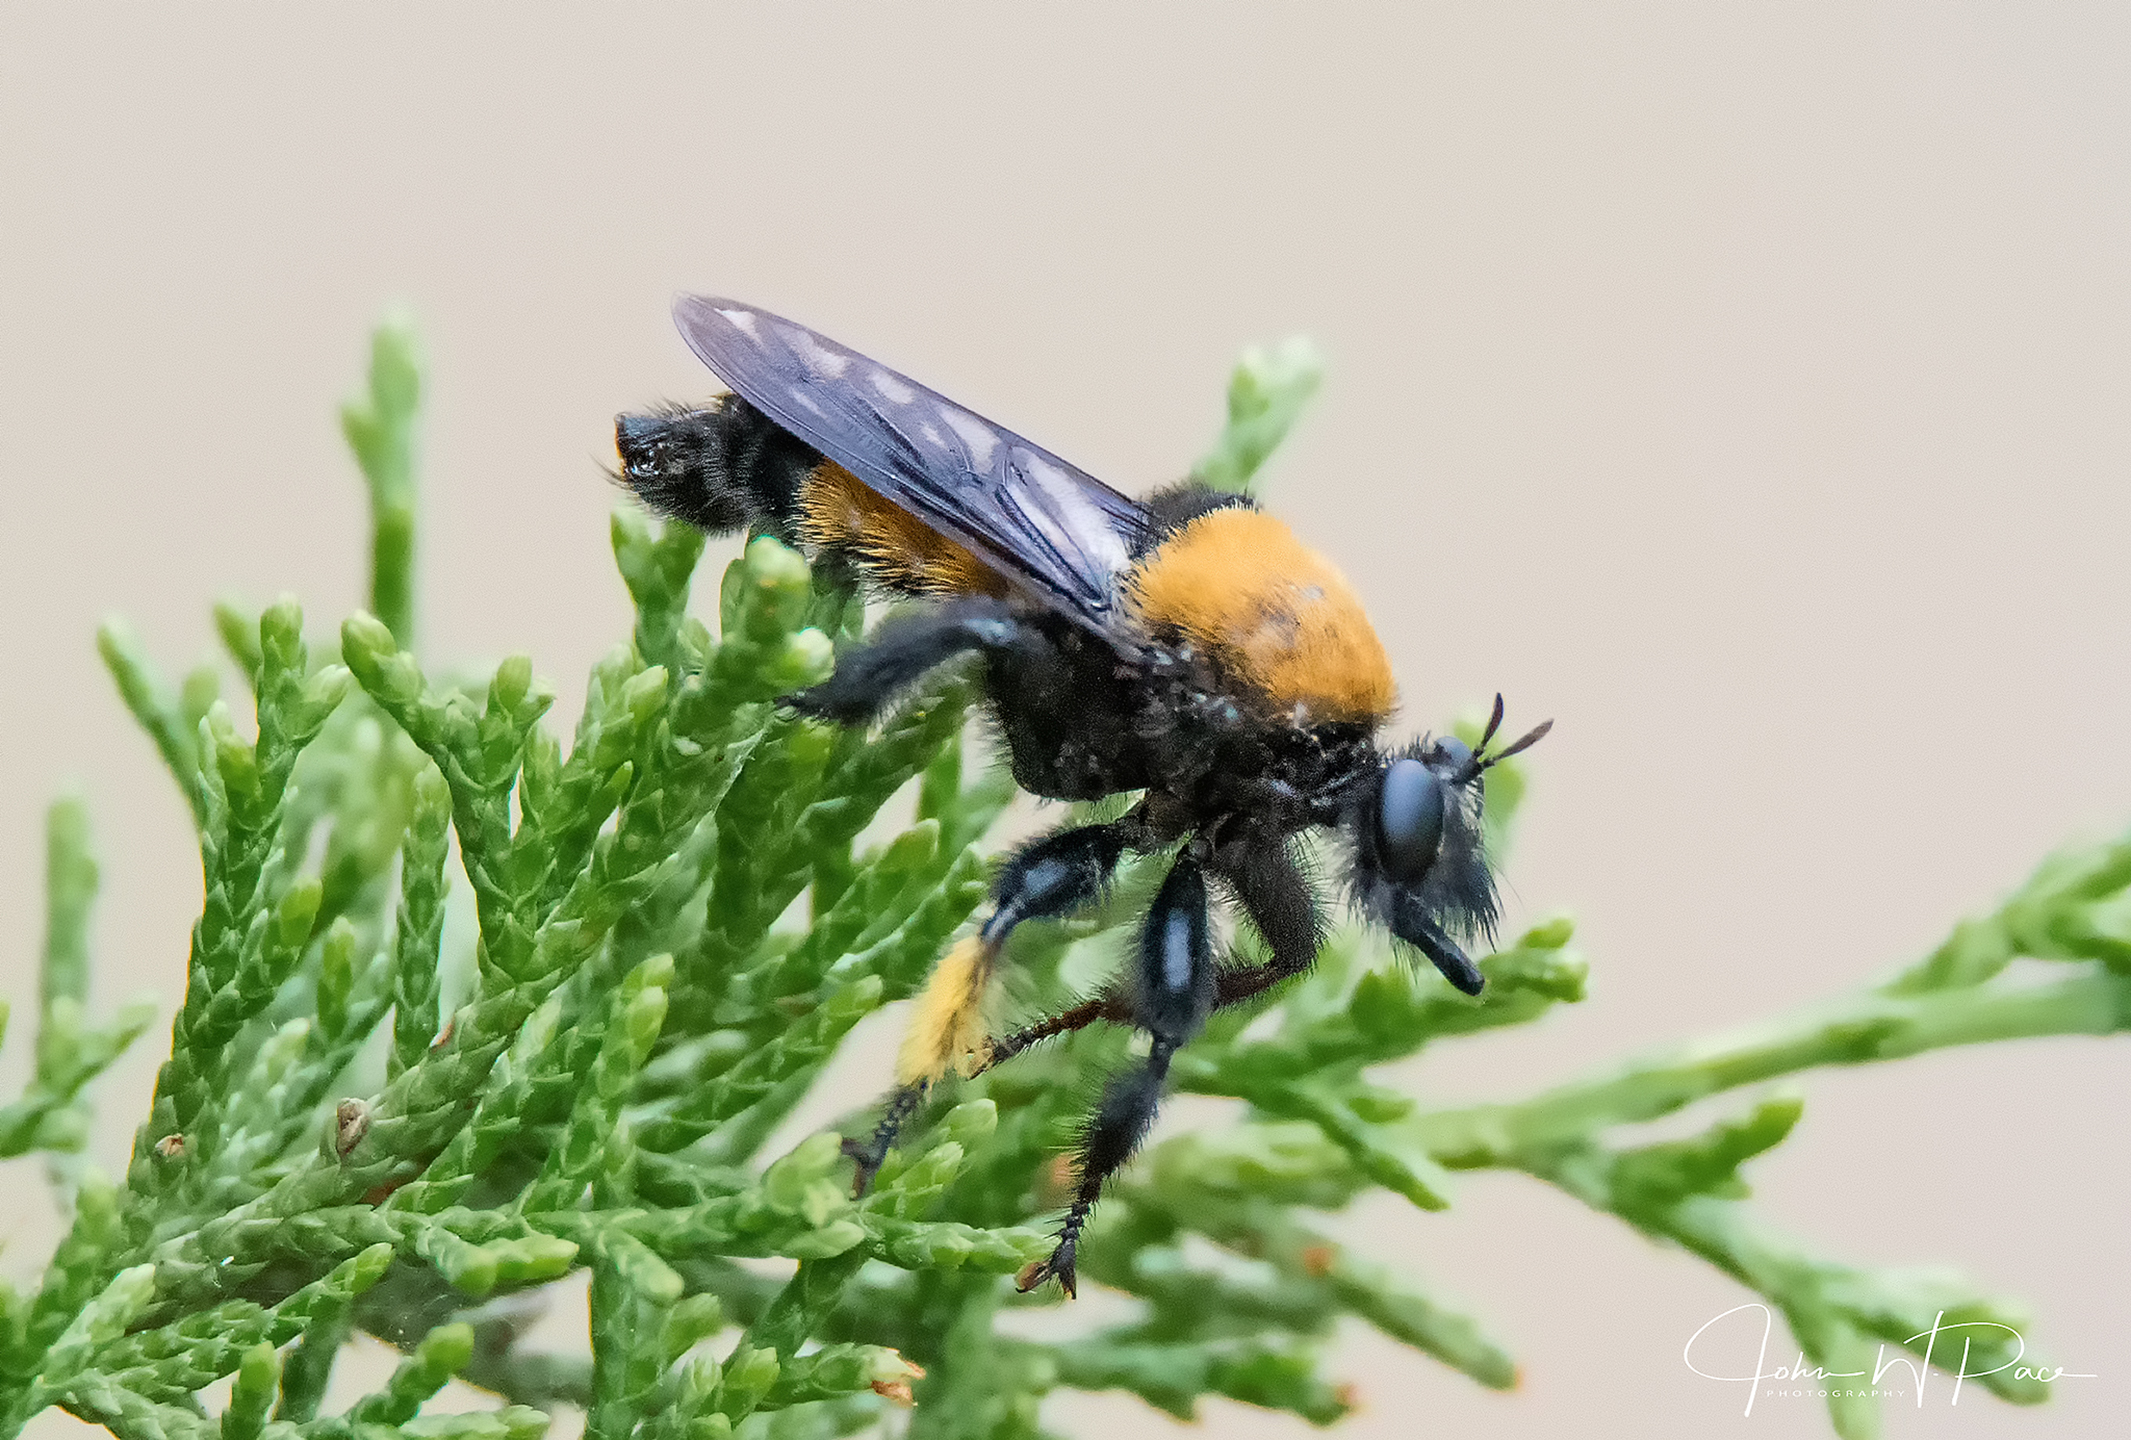 Wasp on Ashe juniper